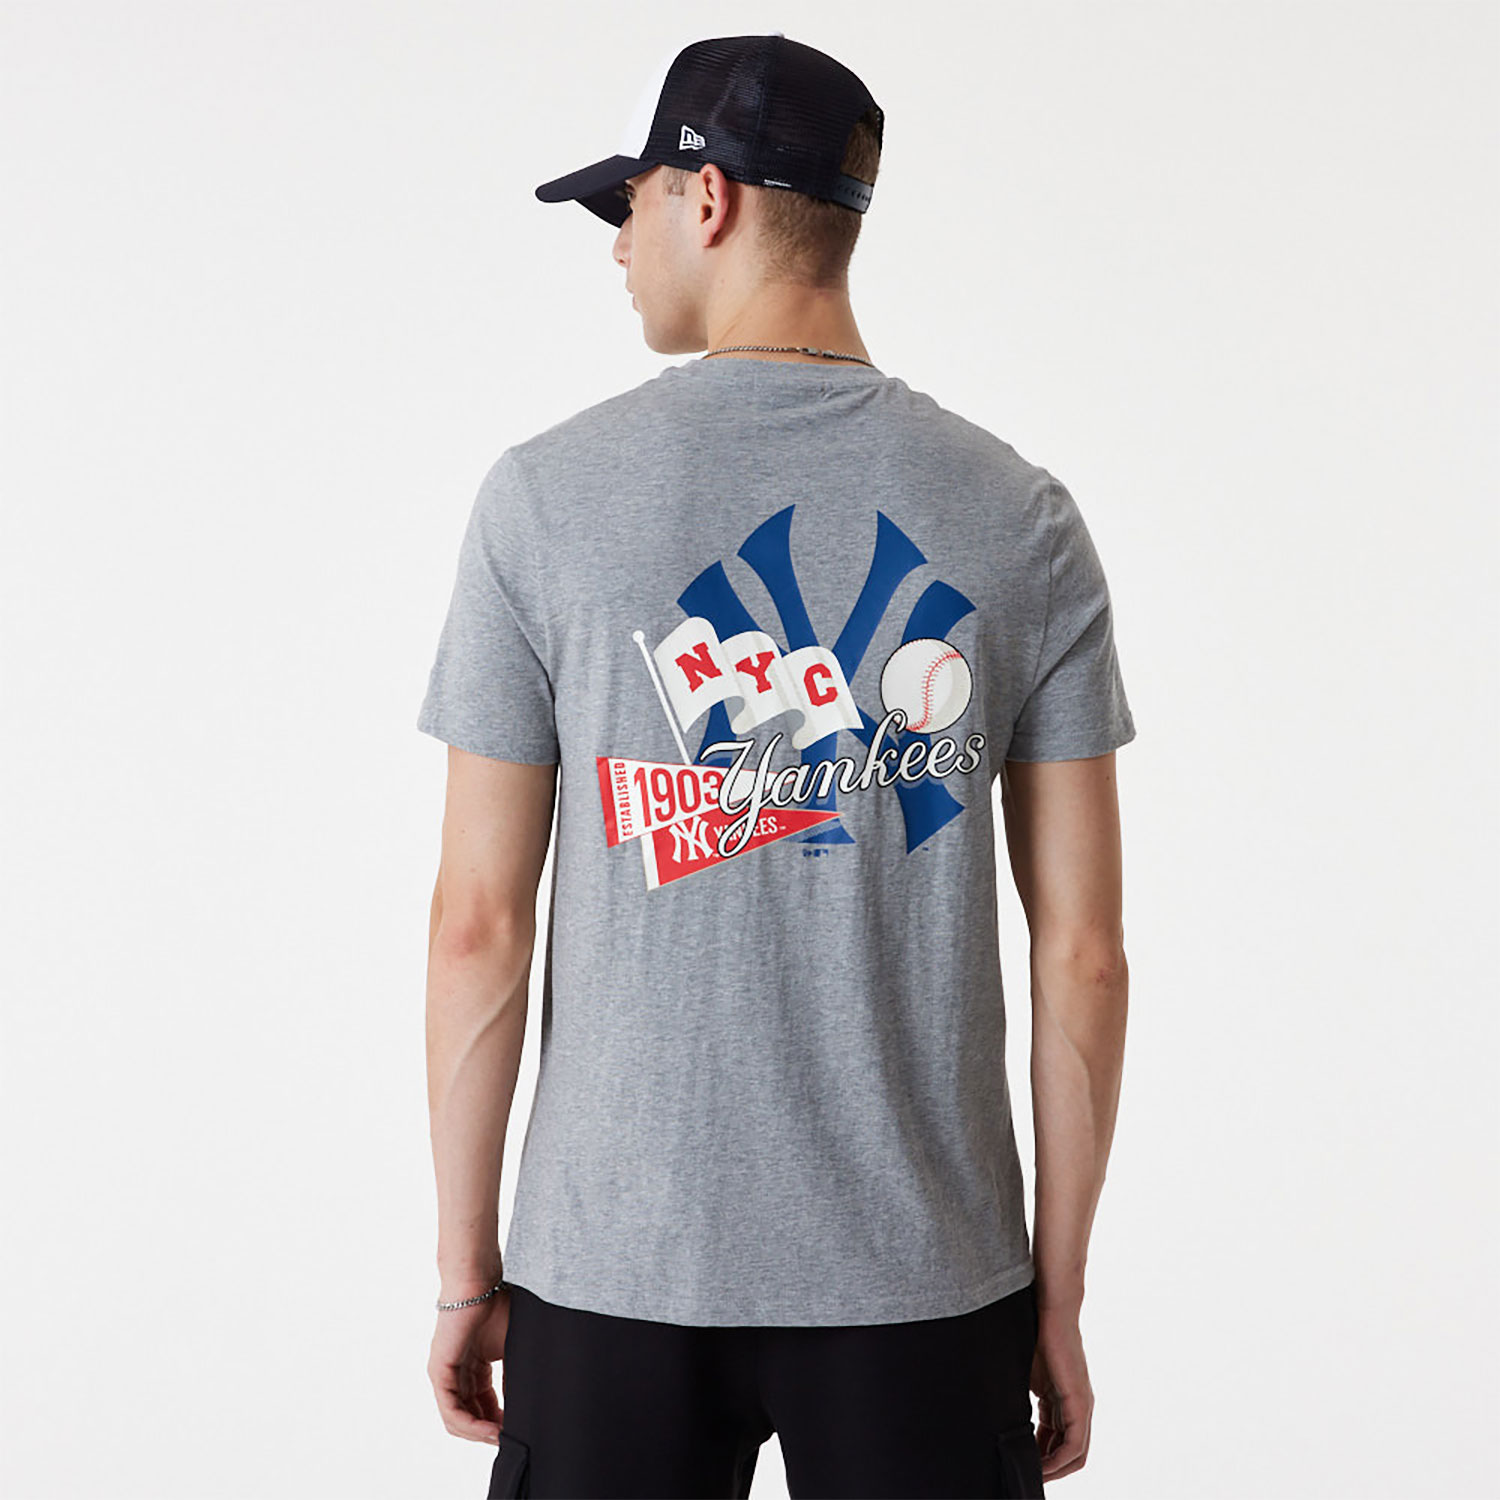 Nike New York Yankees Navy Blue Wordmark Short Sleeve T Shirt